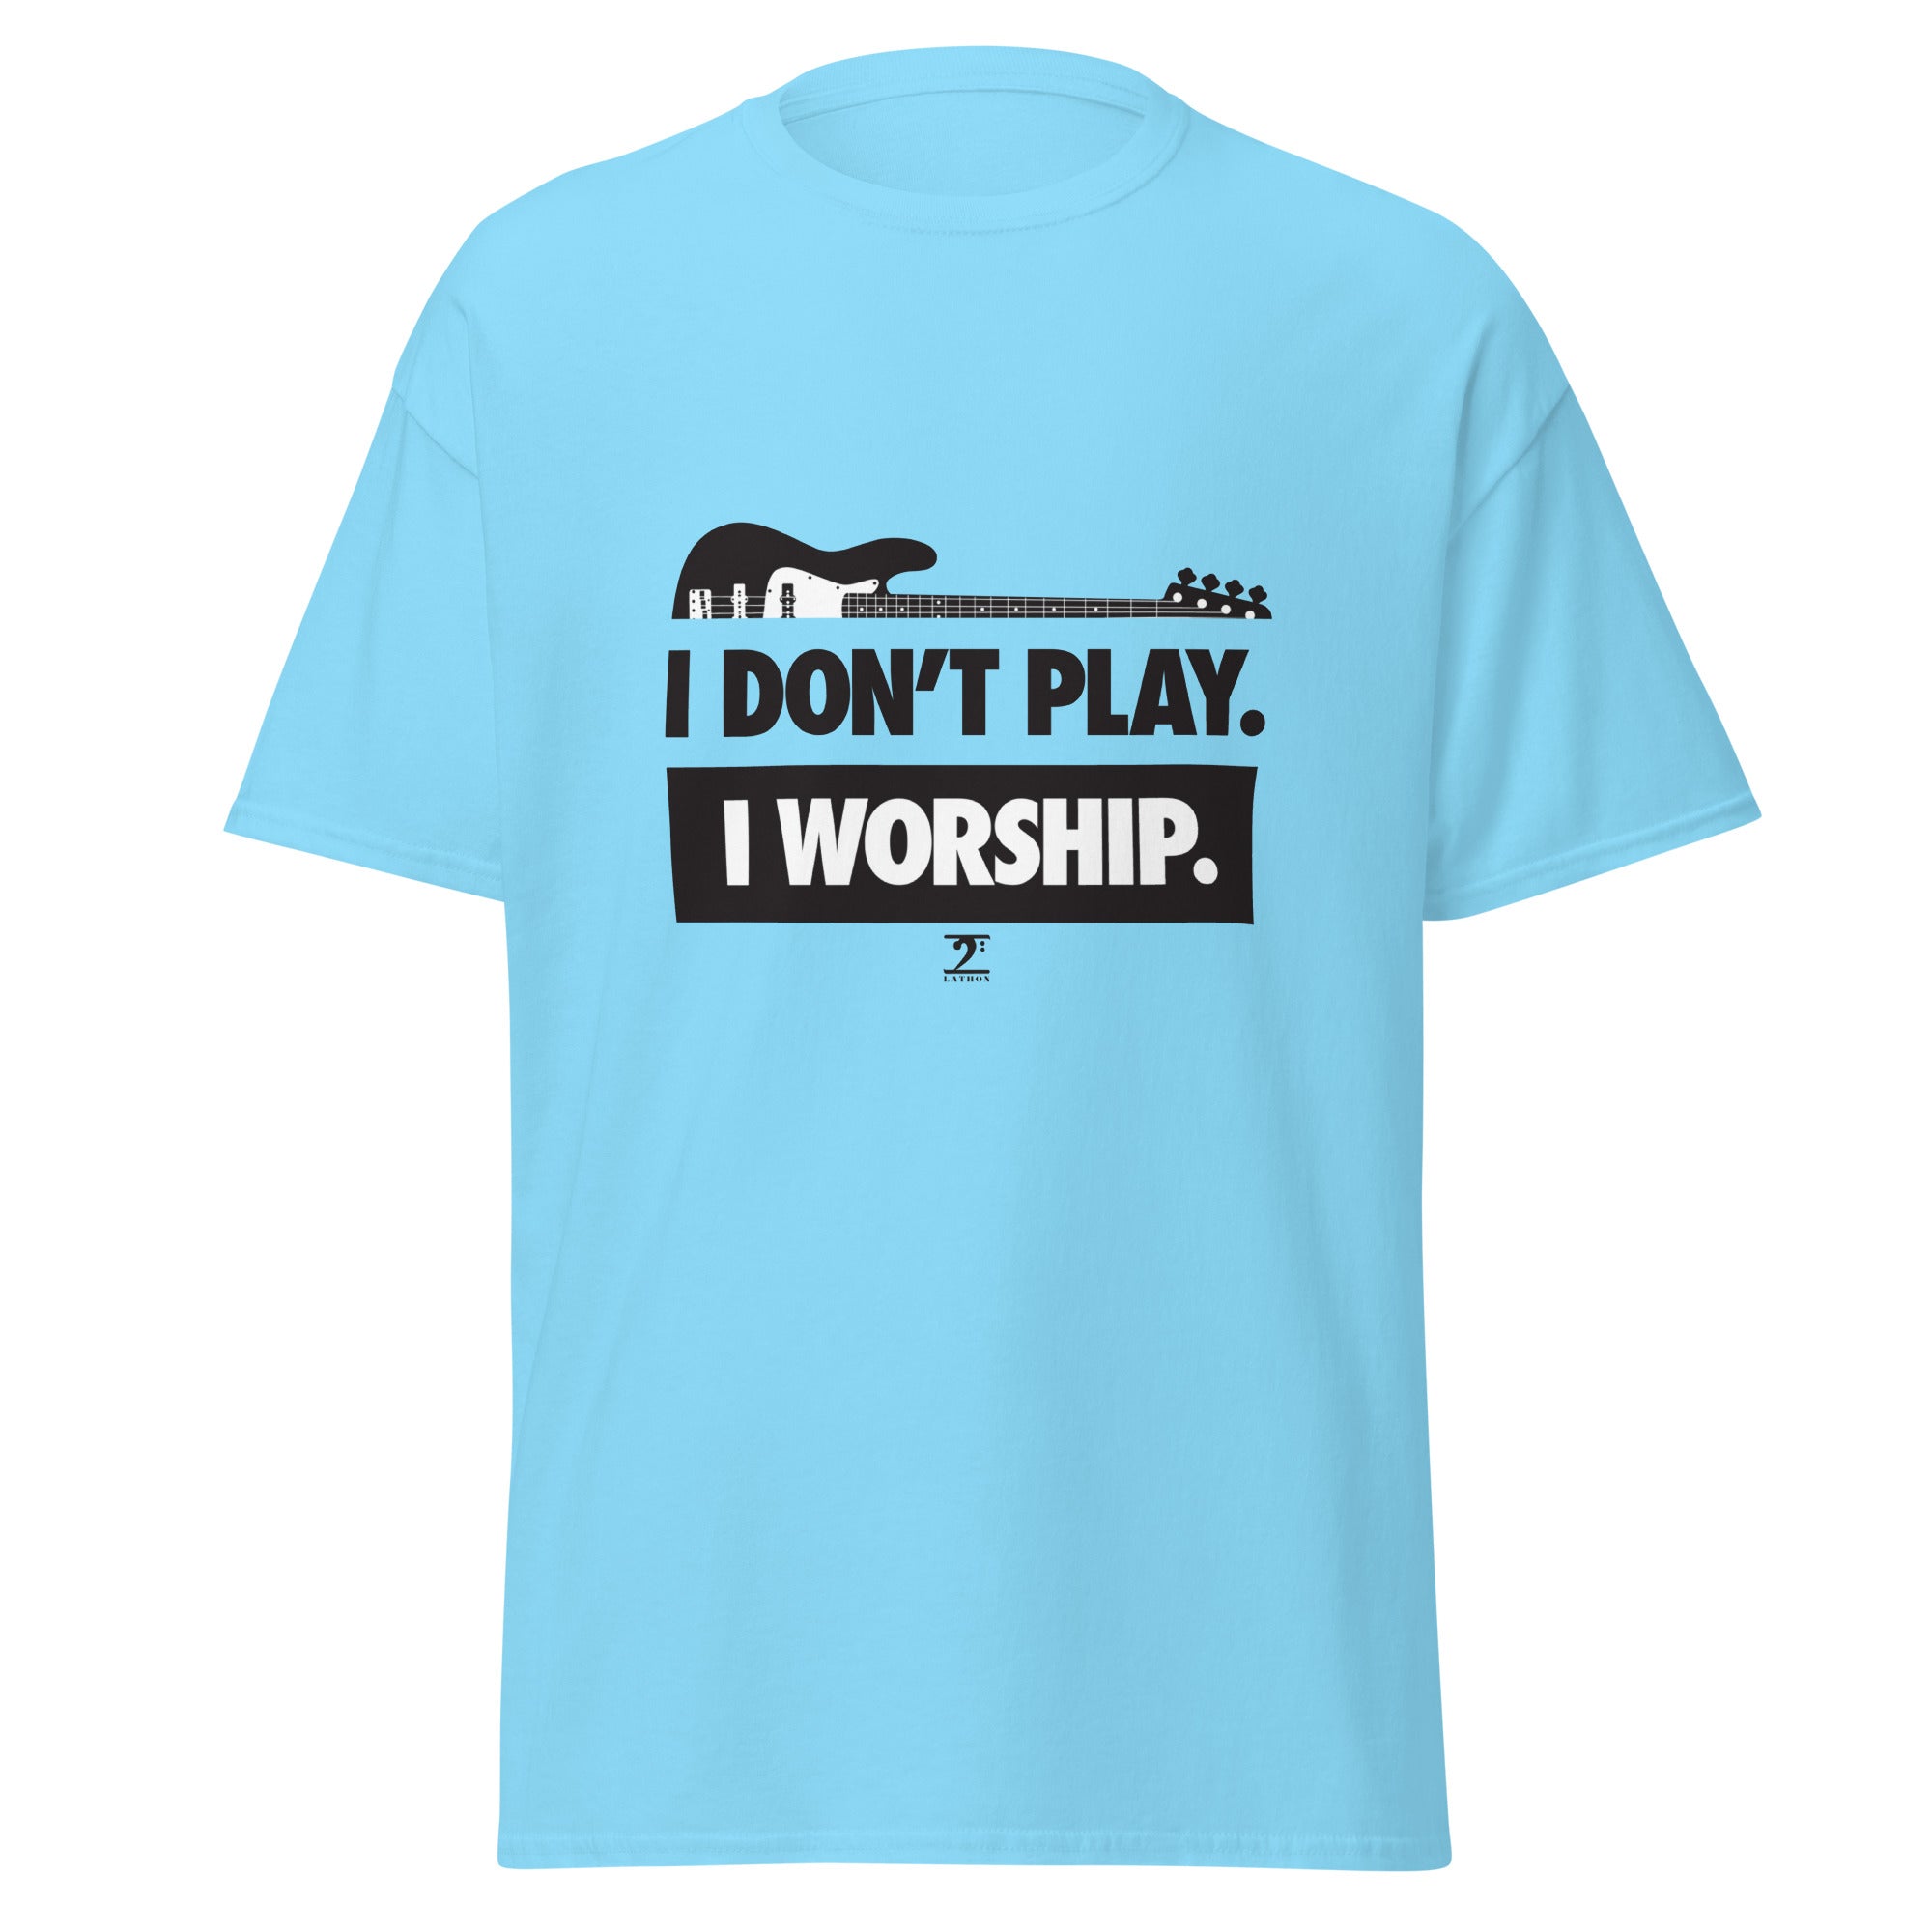 I DON'T PLAY I WORSHIP - PRINTED IN BLACK Short-Sleeve T-Shirt